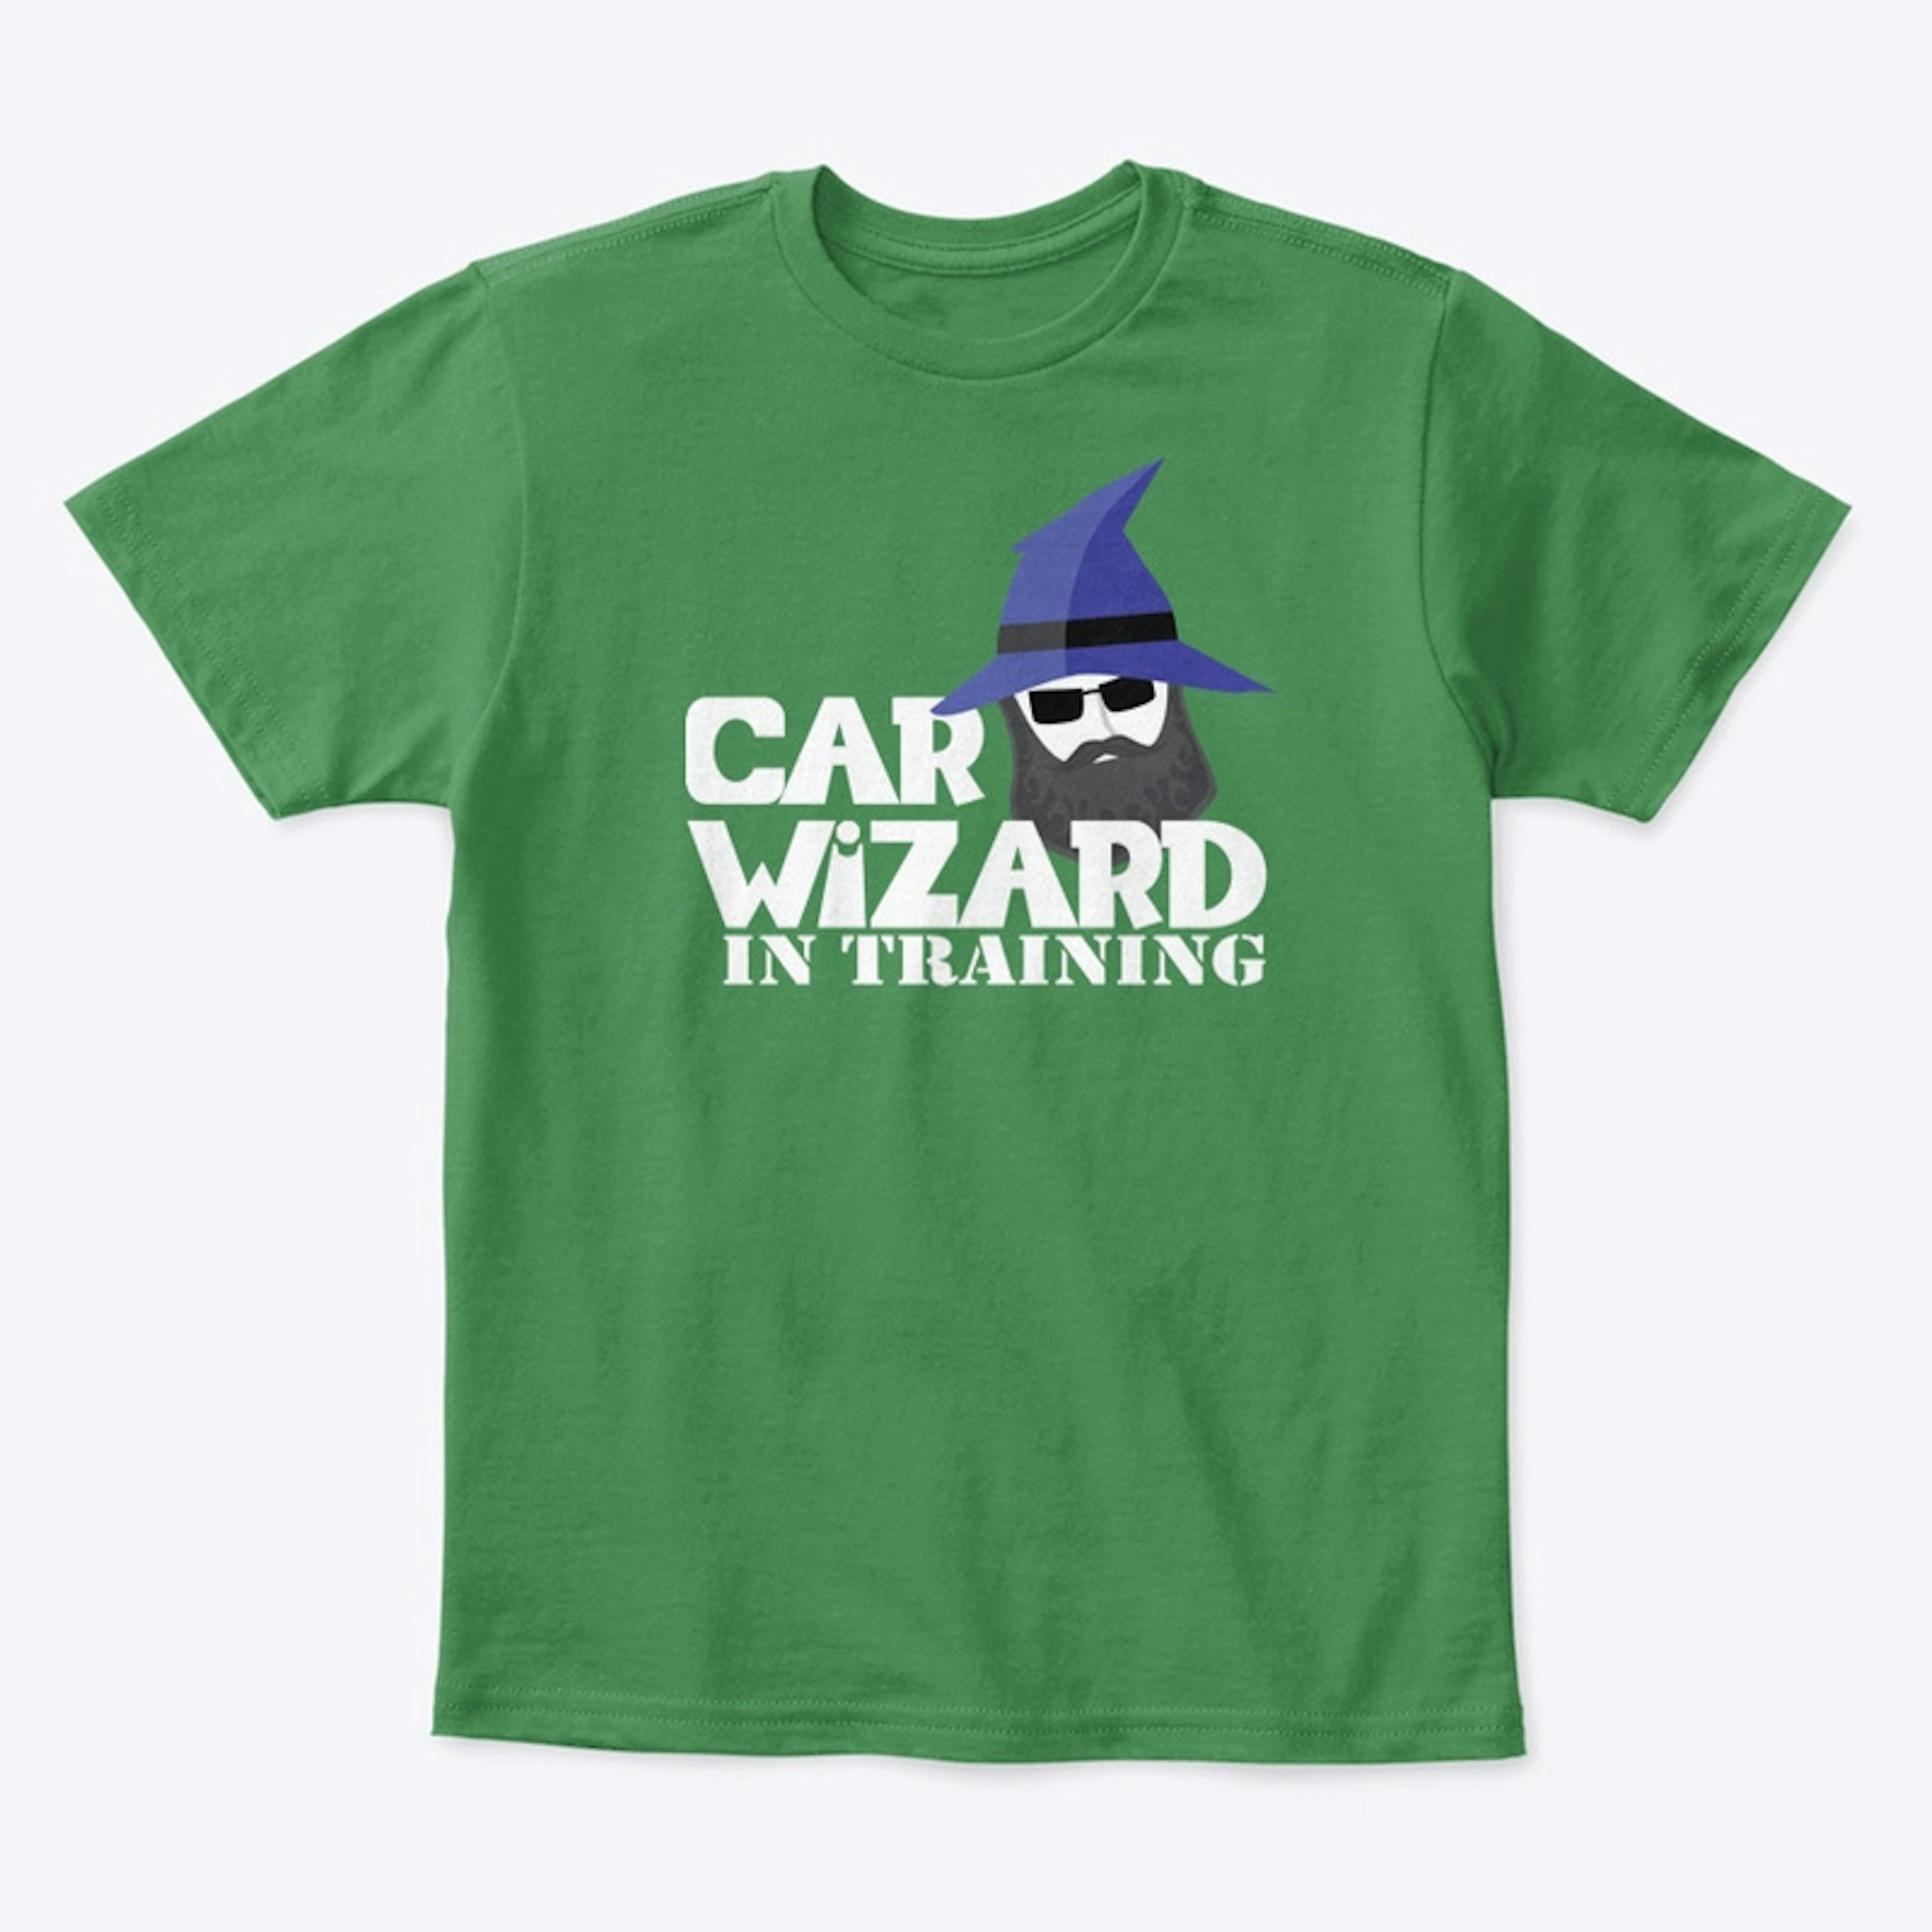 Car Wizard in Training - Kids